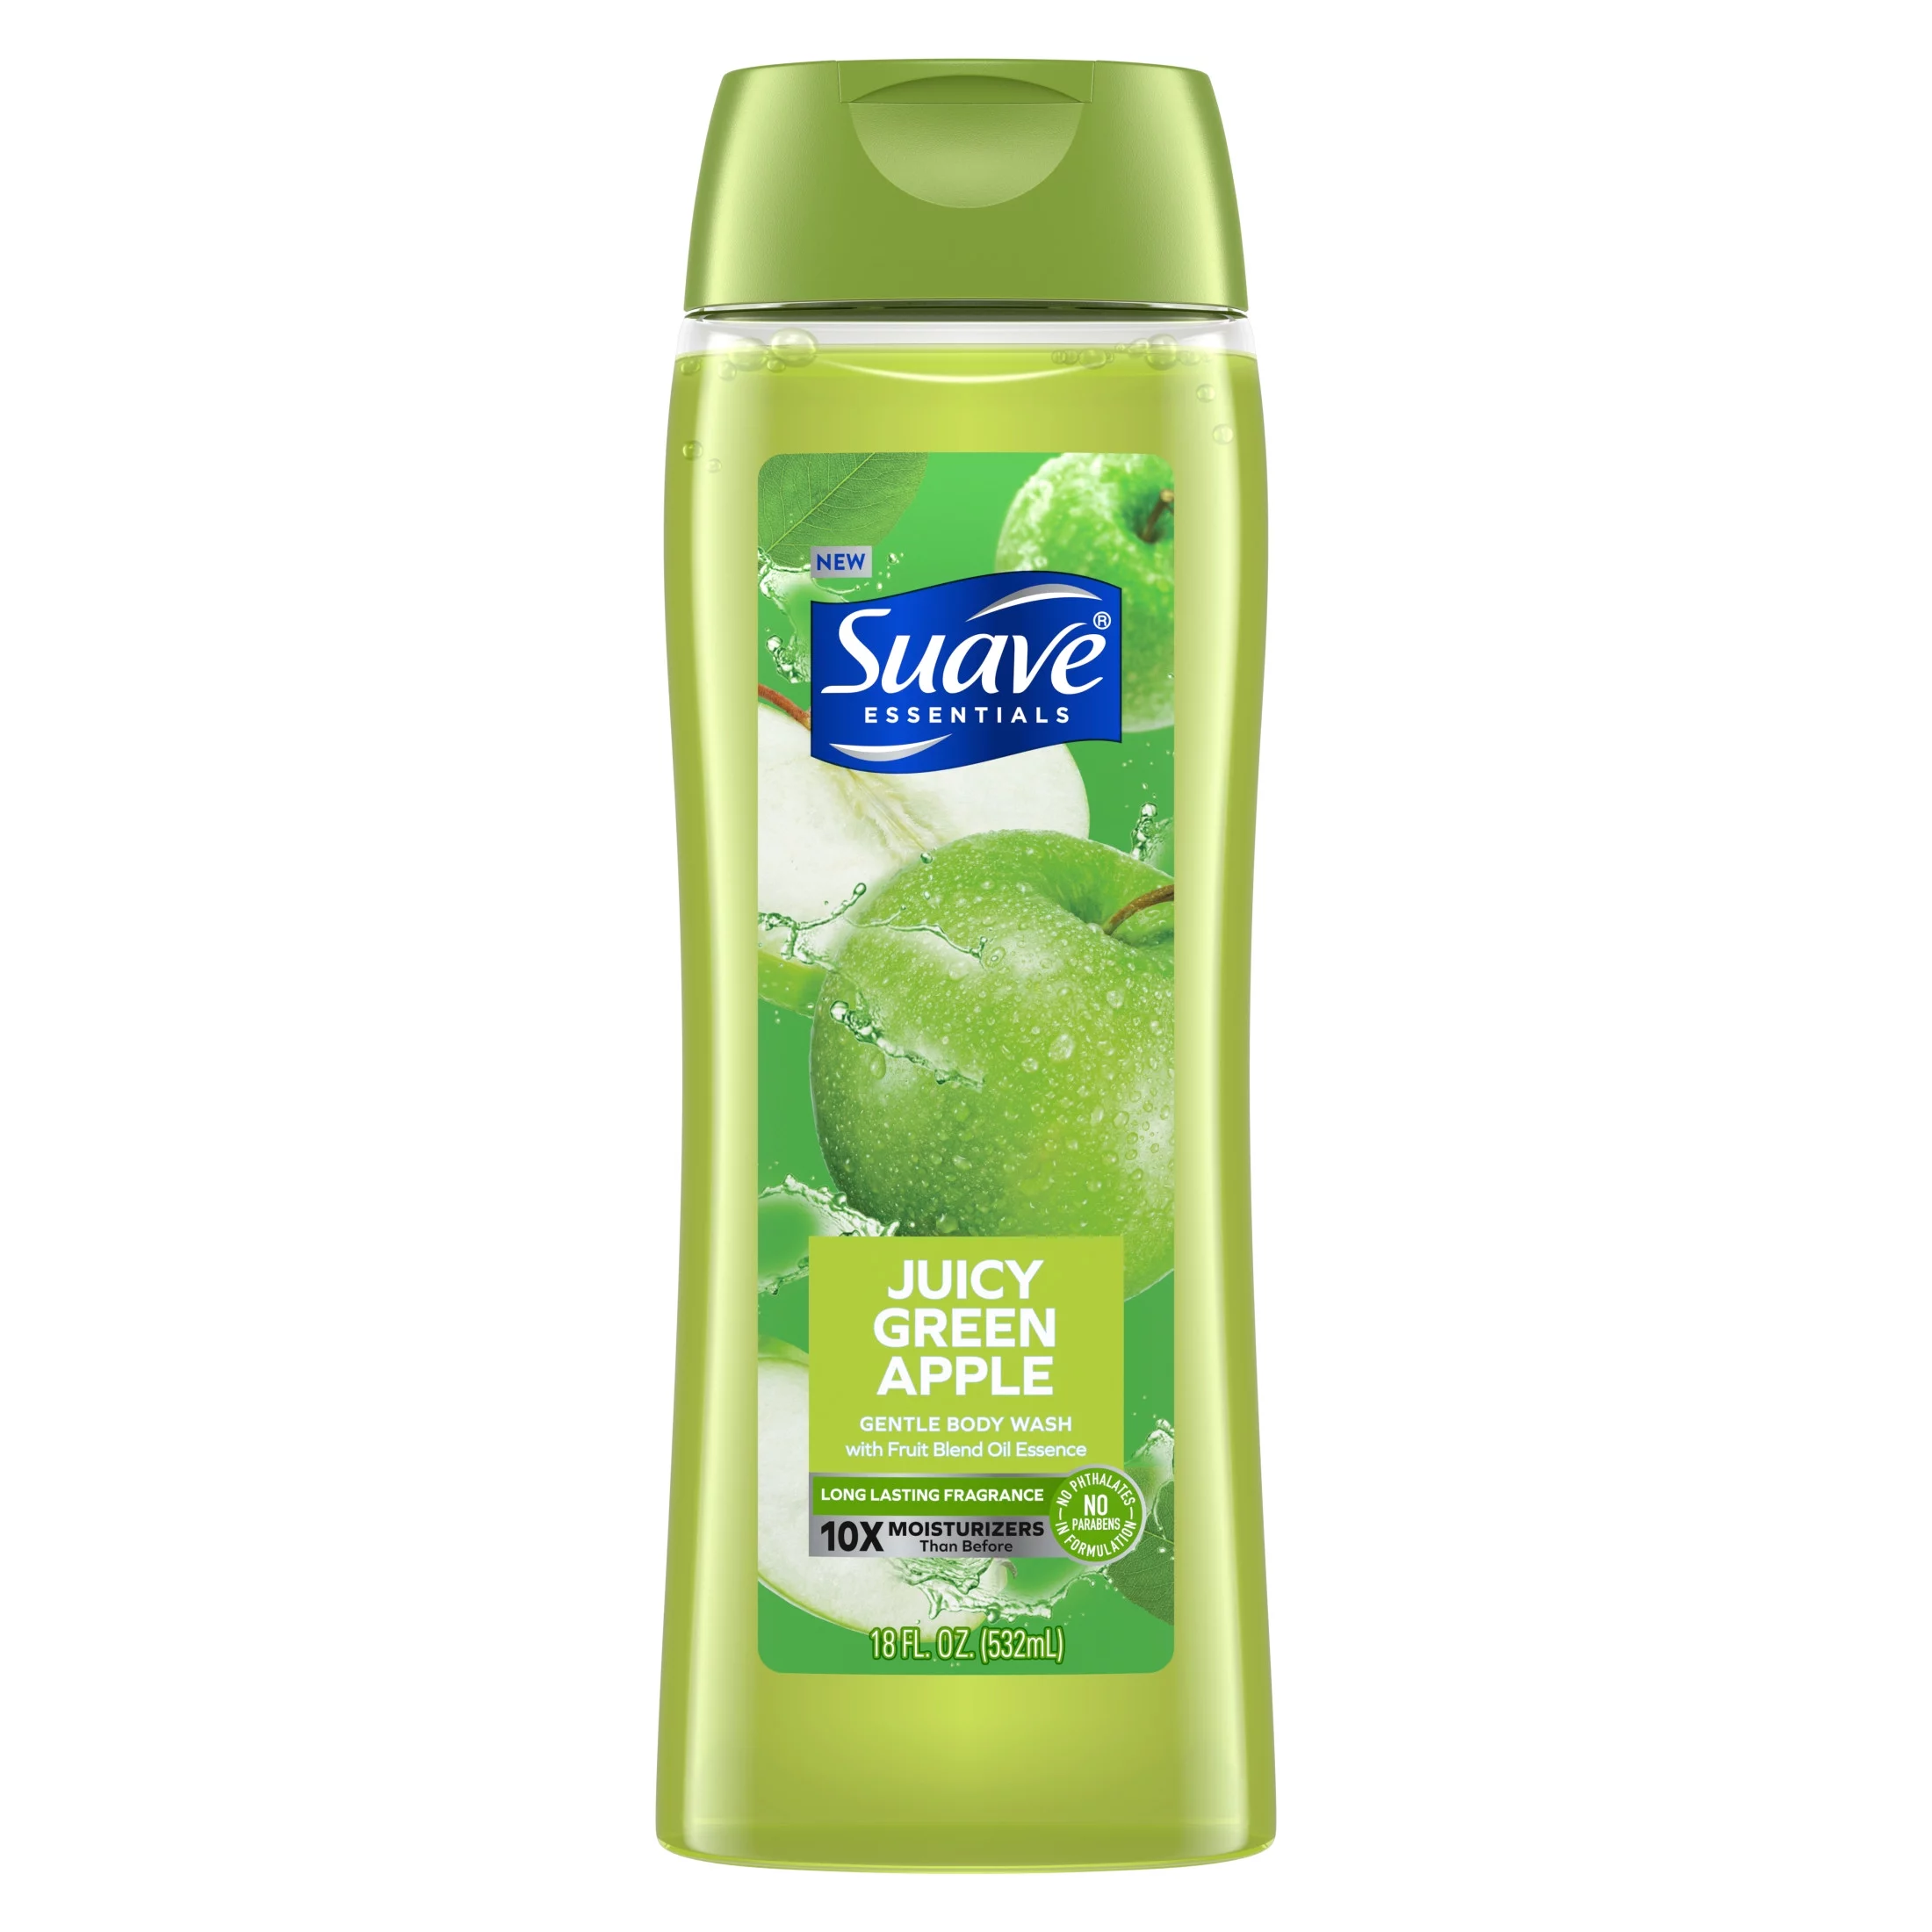 Suave Essentials Gentle Body Wash, Juicy Green Apple, All Skin Types 18 oz